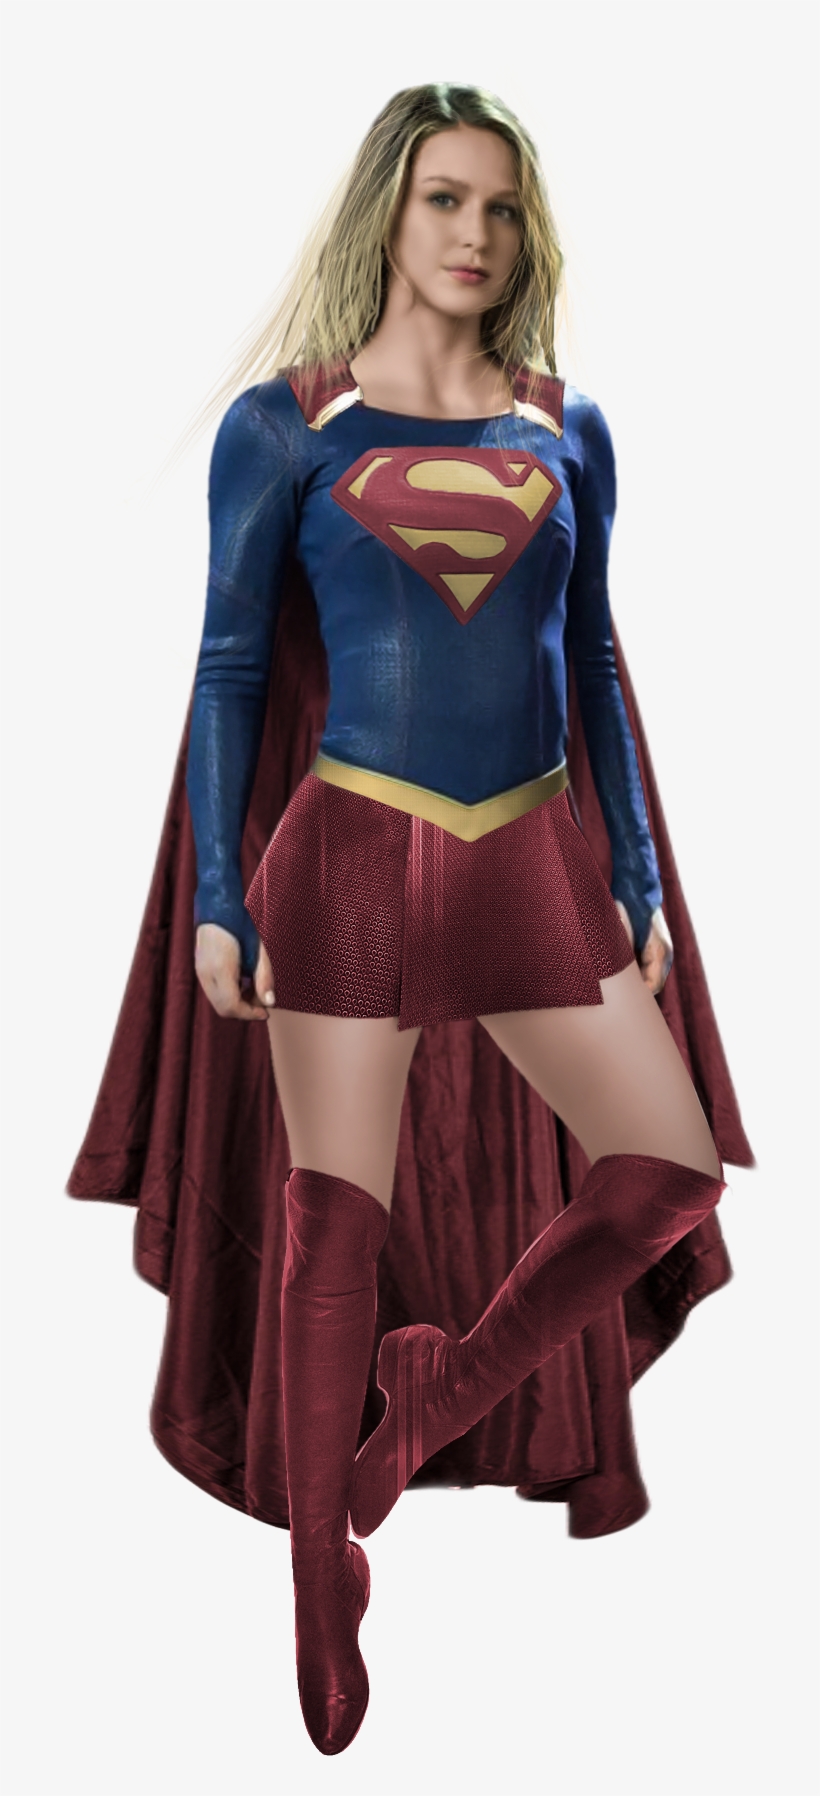 Supergirl Png, transparent png #614023